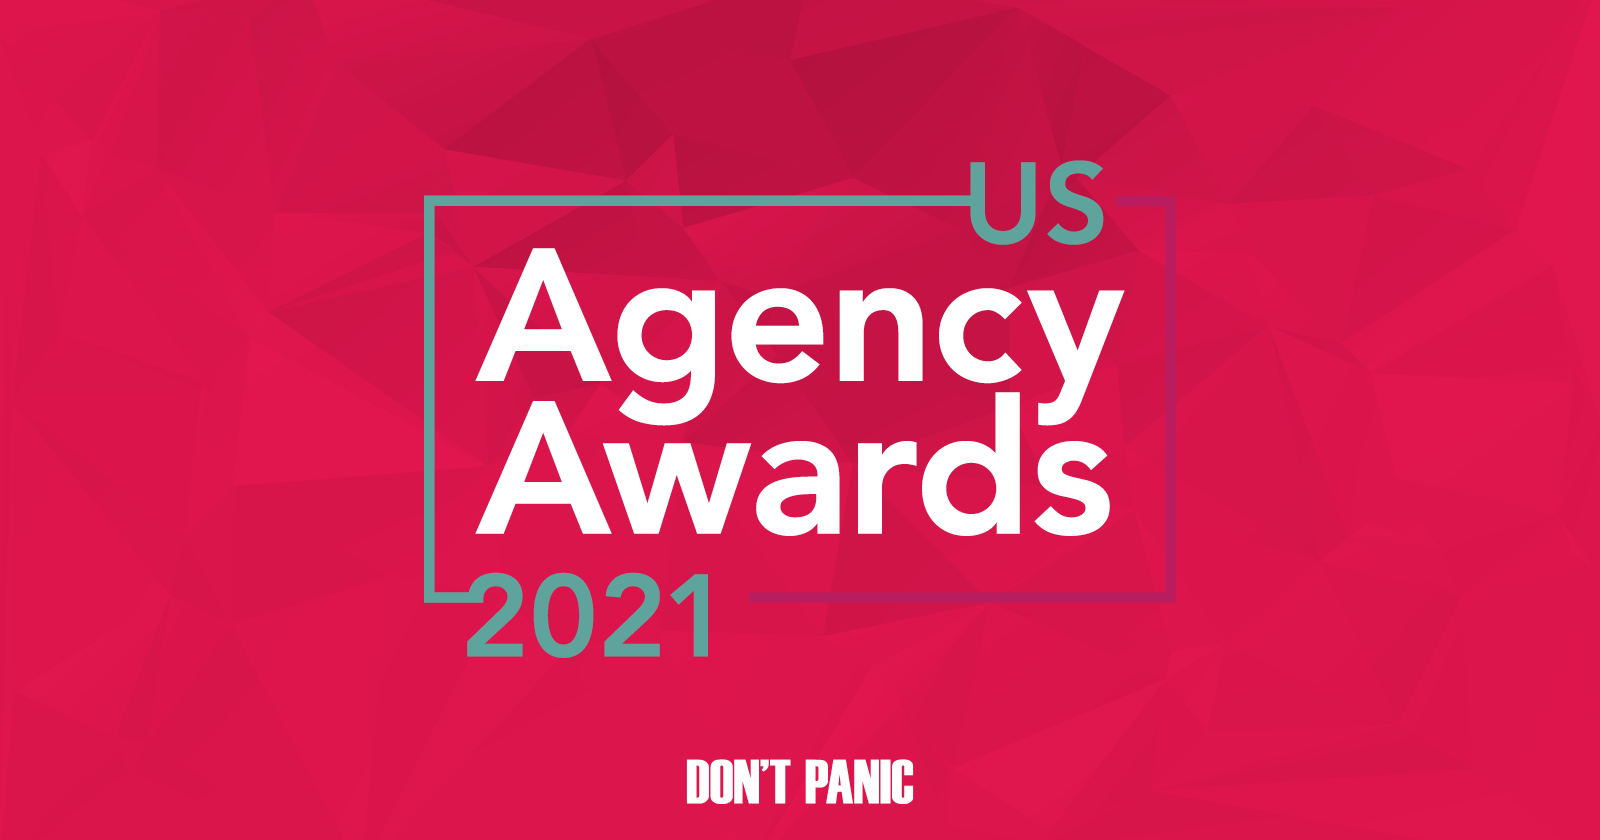 sej-us-agency-awards-featured-image-613ac1ba16ed5-sej.jpg